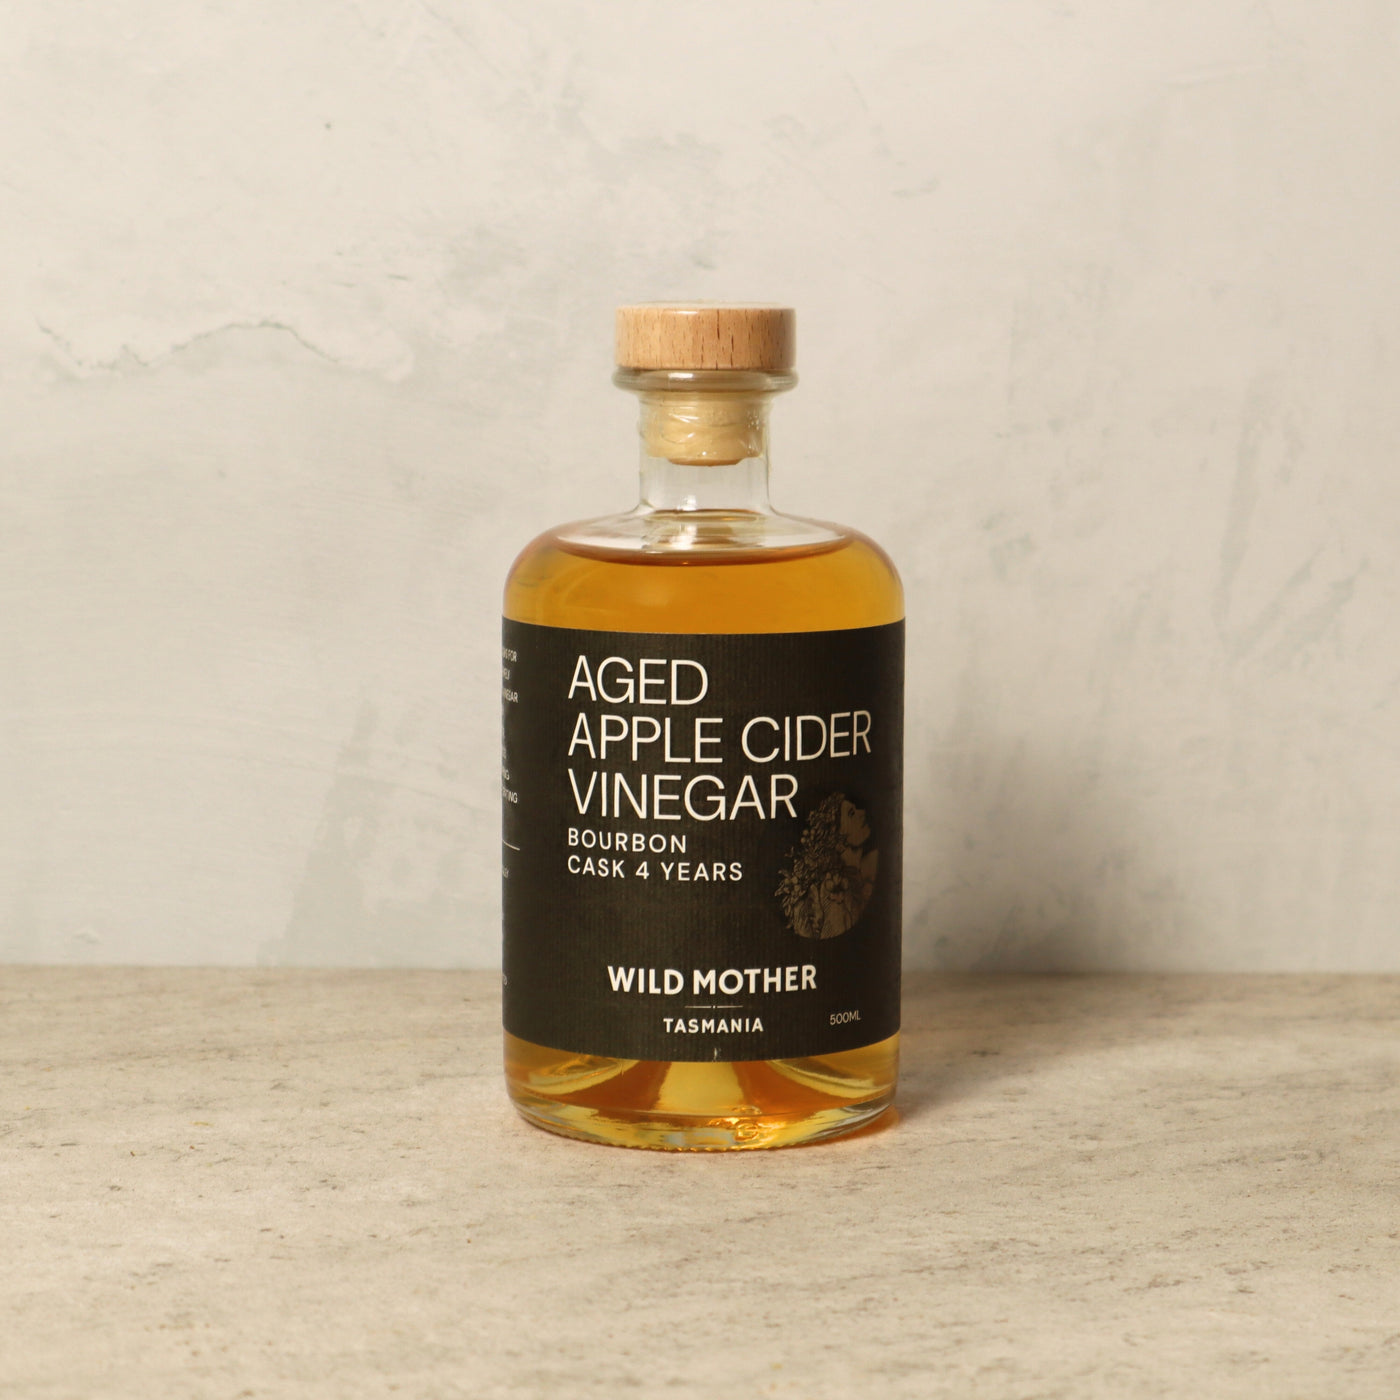 Wild Mother Aged Apple Cider Vinegar - Bourbon Cask 4 Years